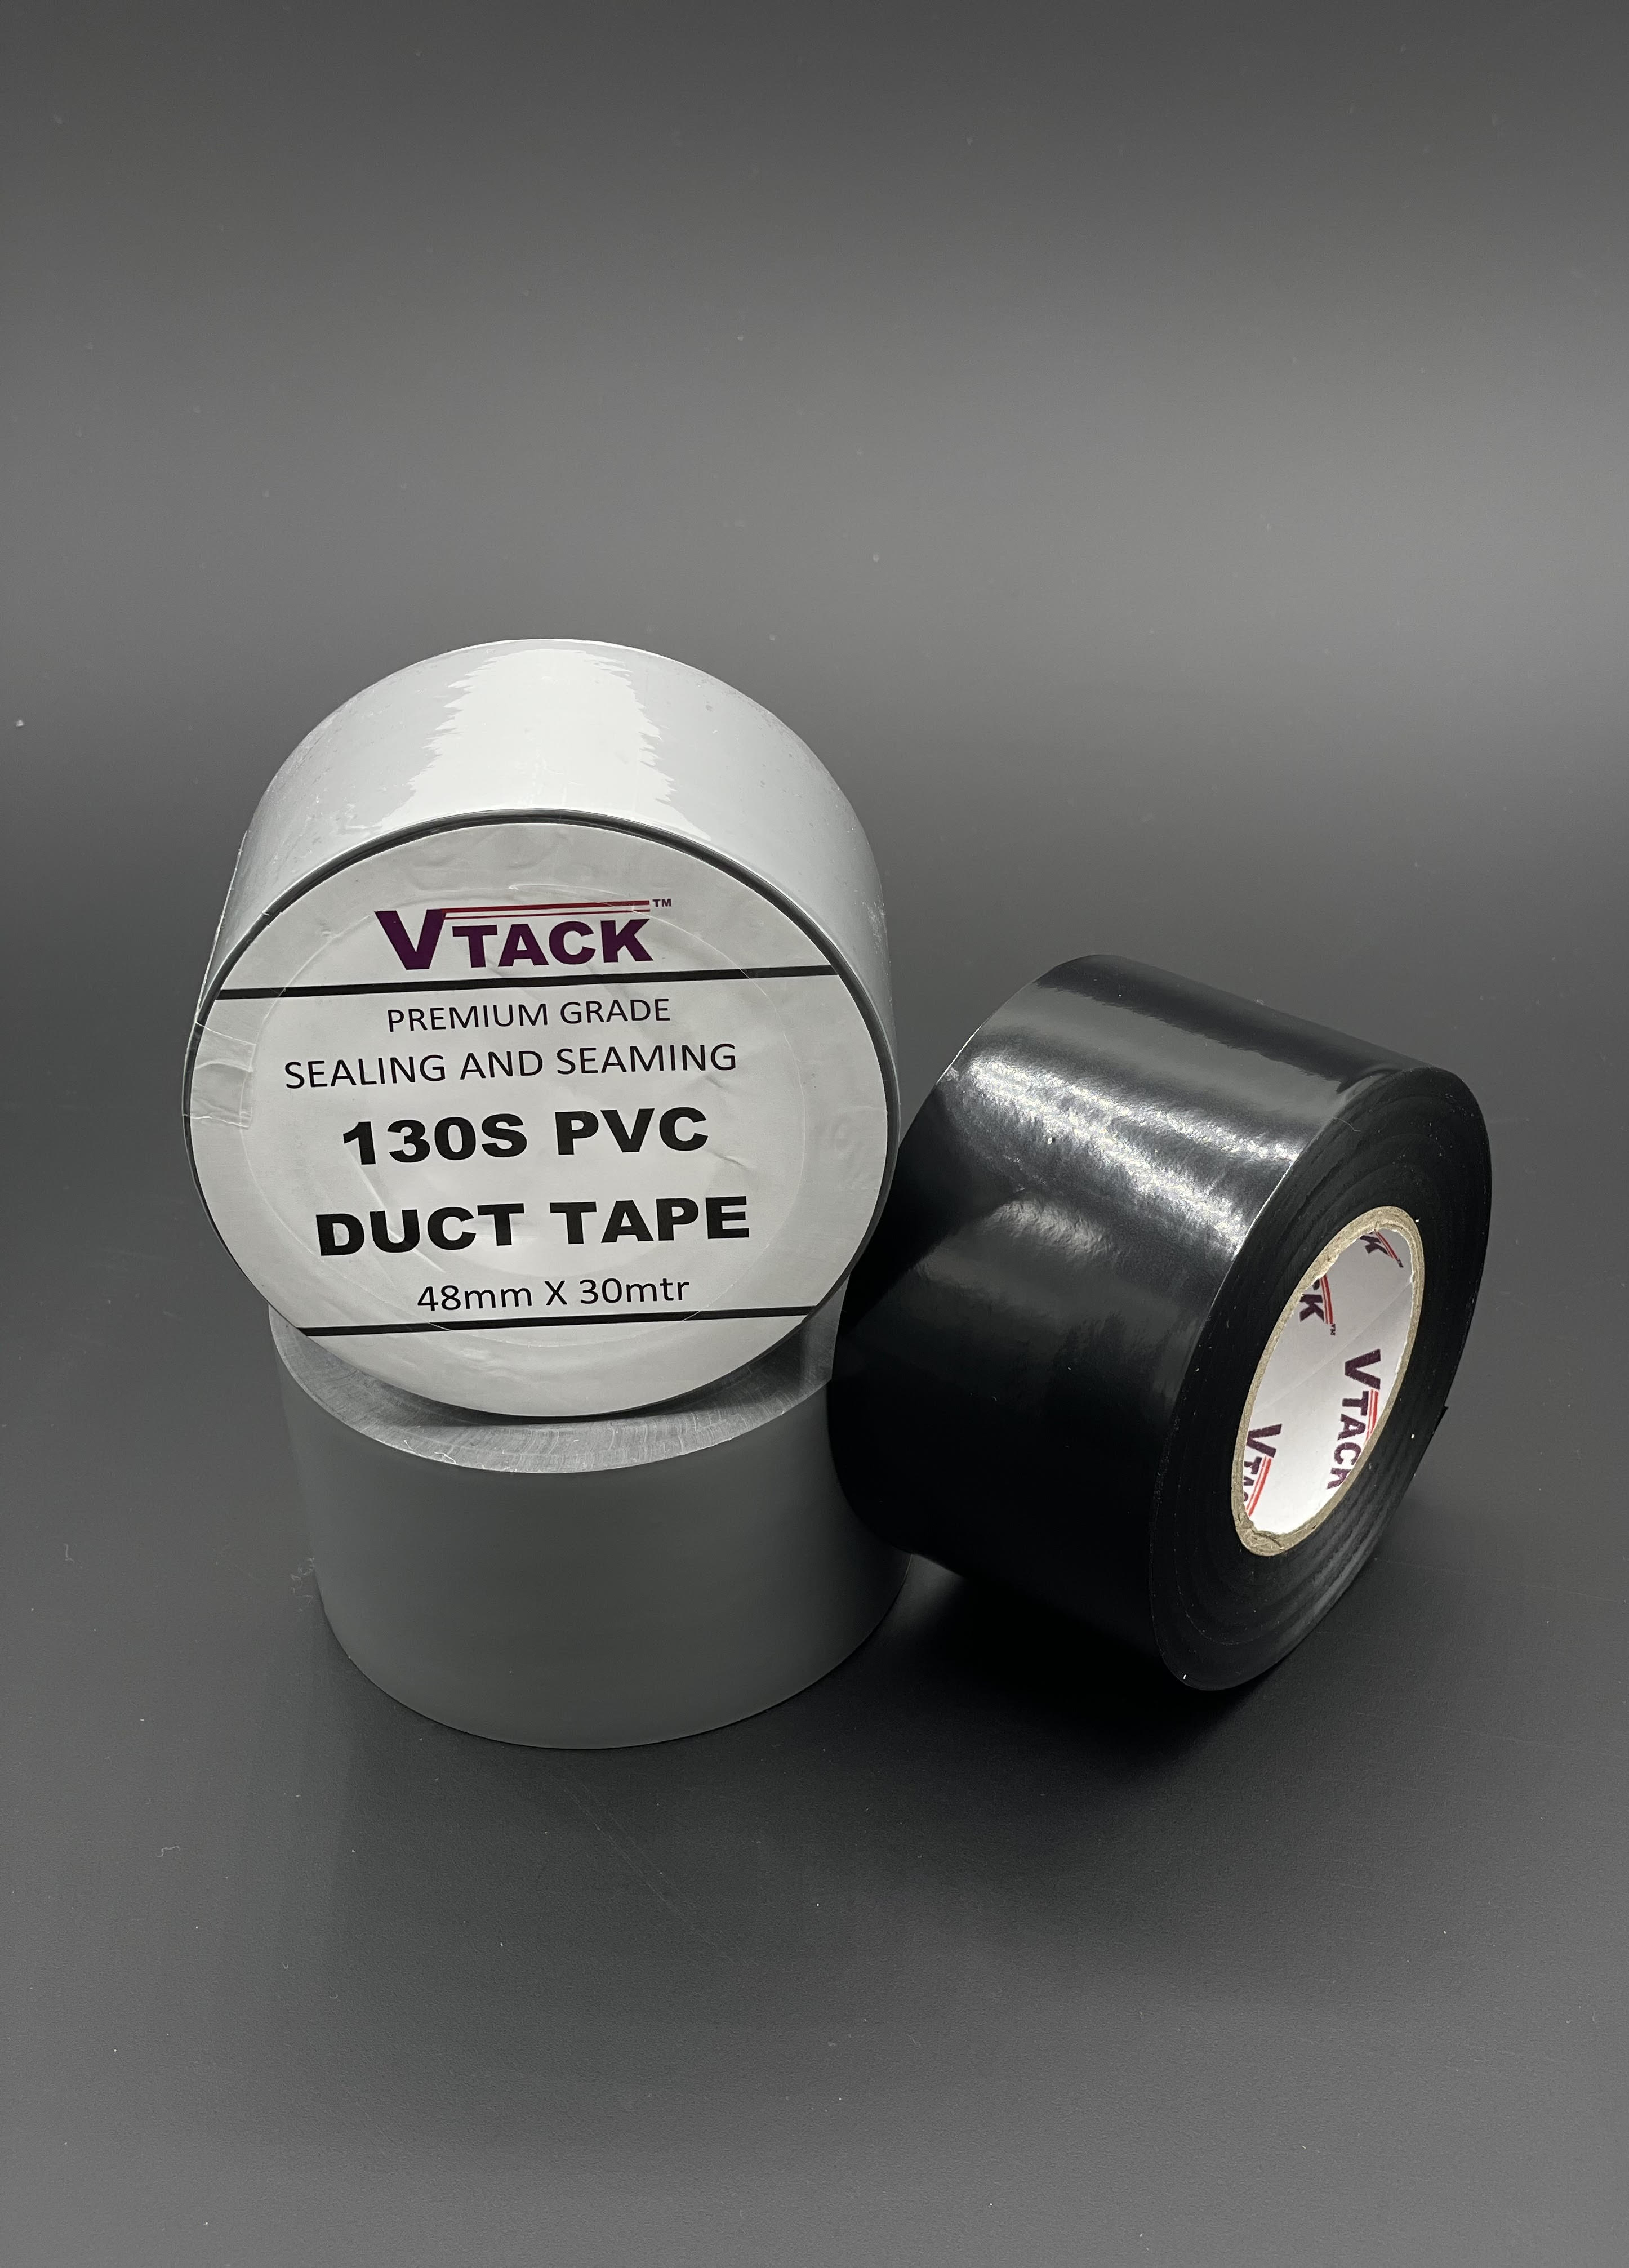 VTACK PVC Duct Tape 48mm x 30m